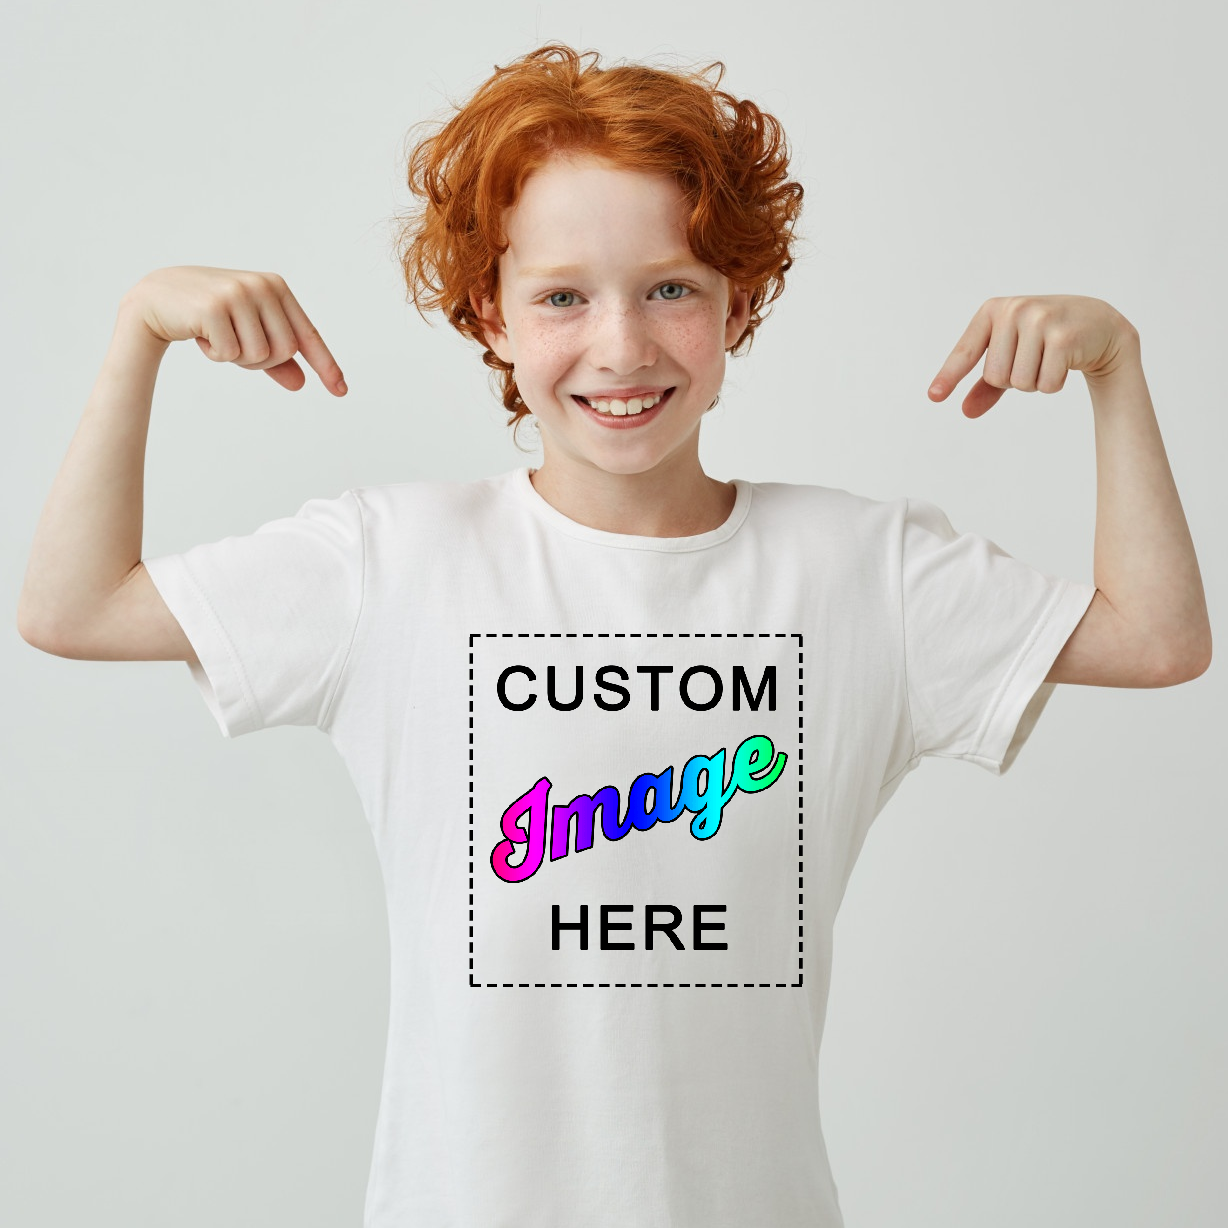 [Custom Image] Organic Toddler Kids T-shirt - Short Sleeve